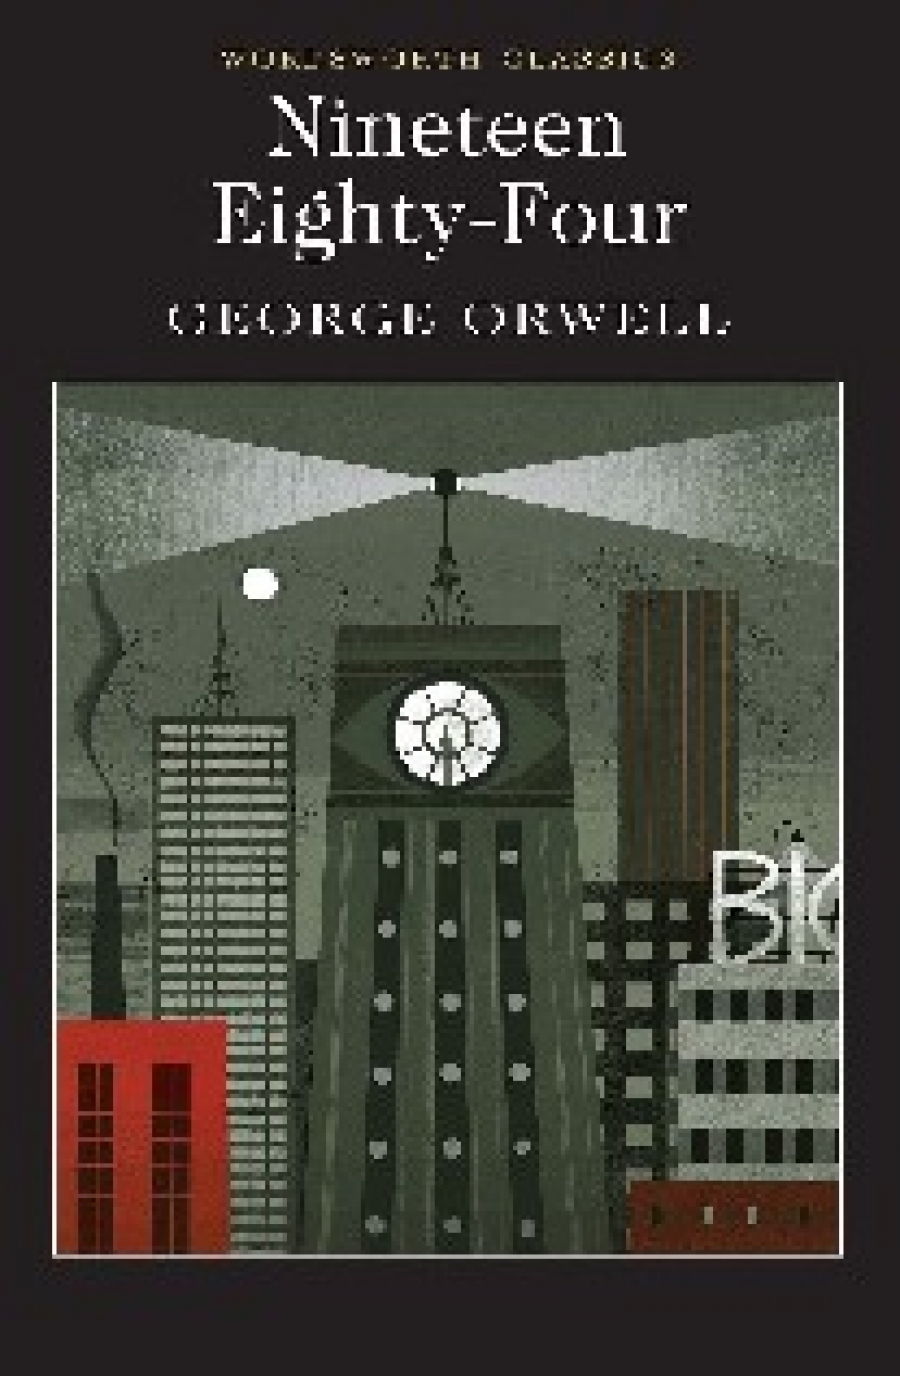 George Orwell Nineteen Eighty-Four 